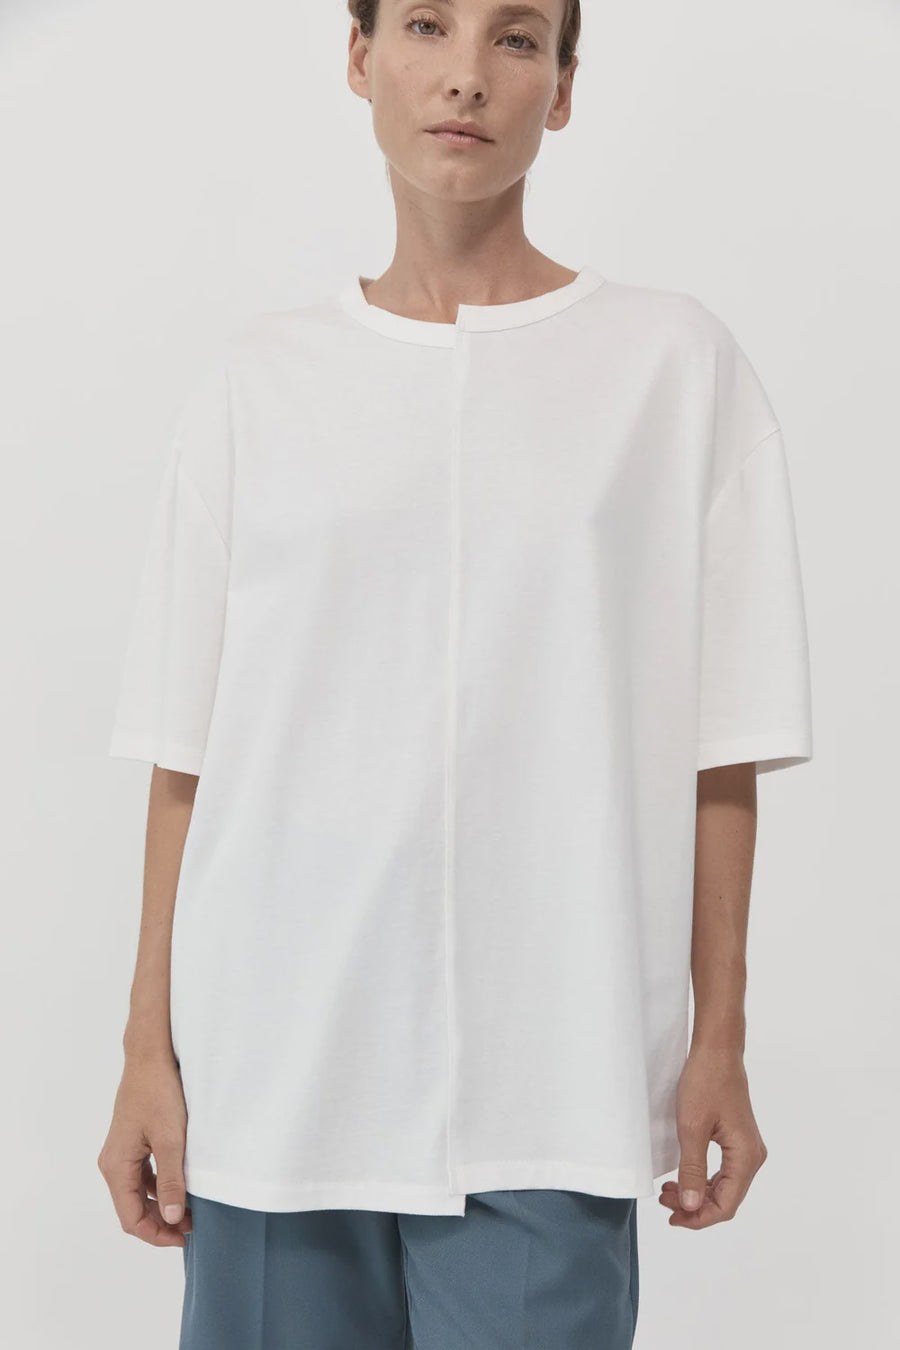 St. AGNI Deconstructed T/Shirt White